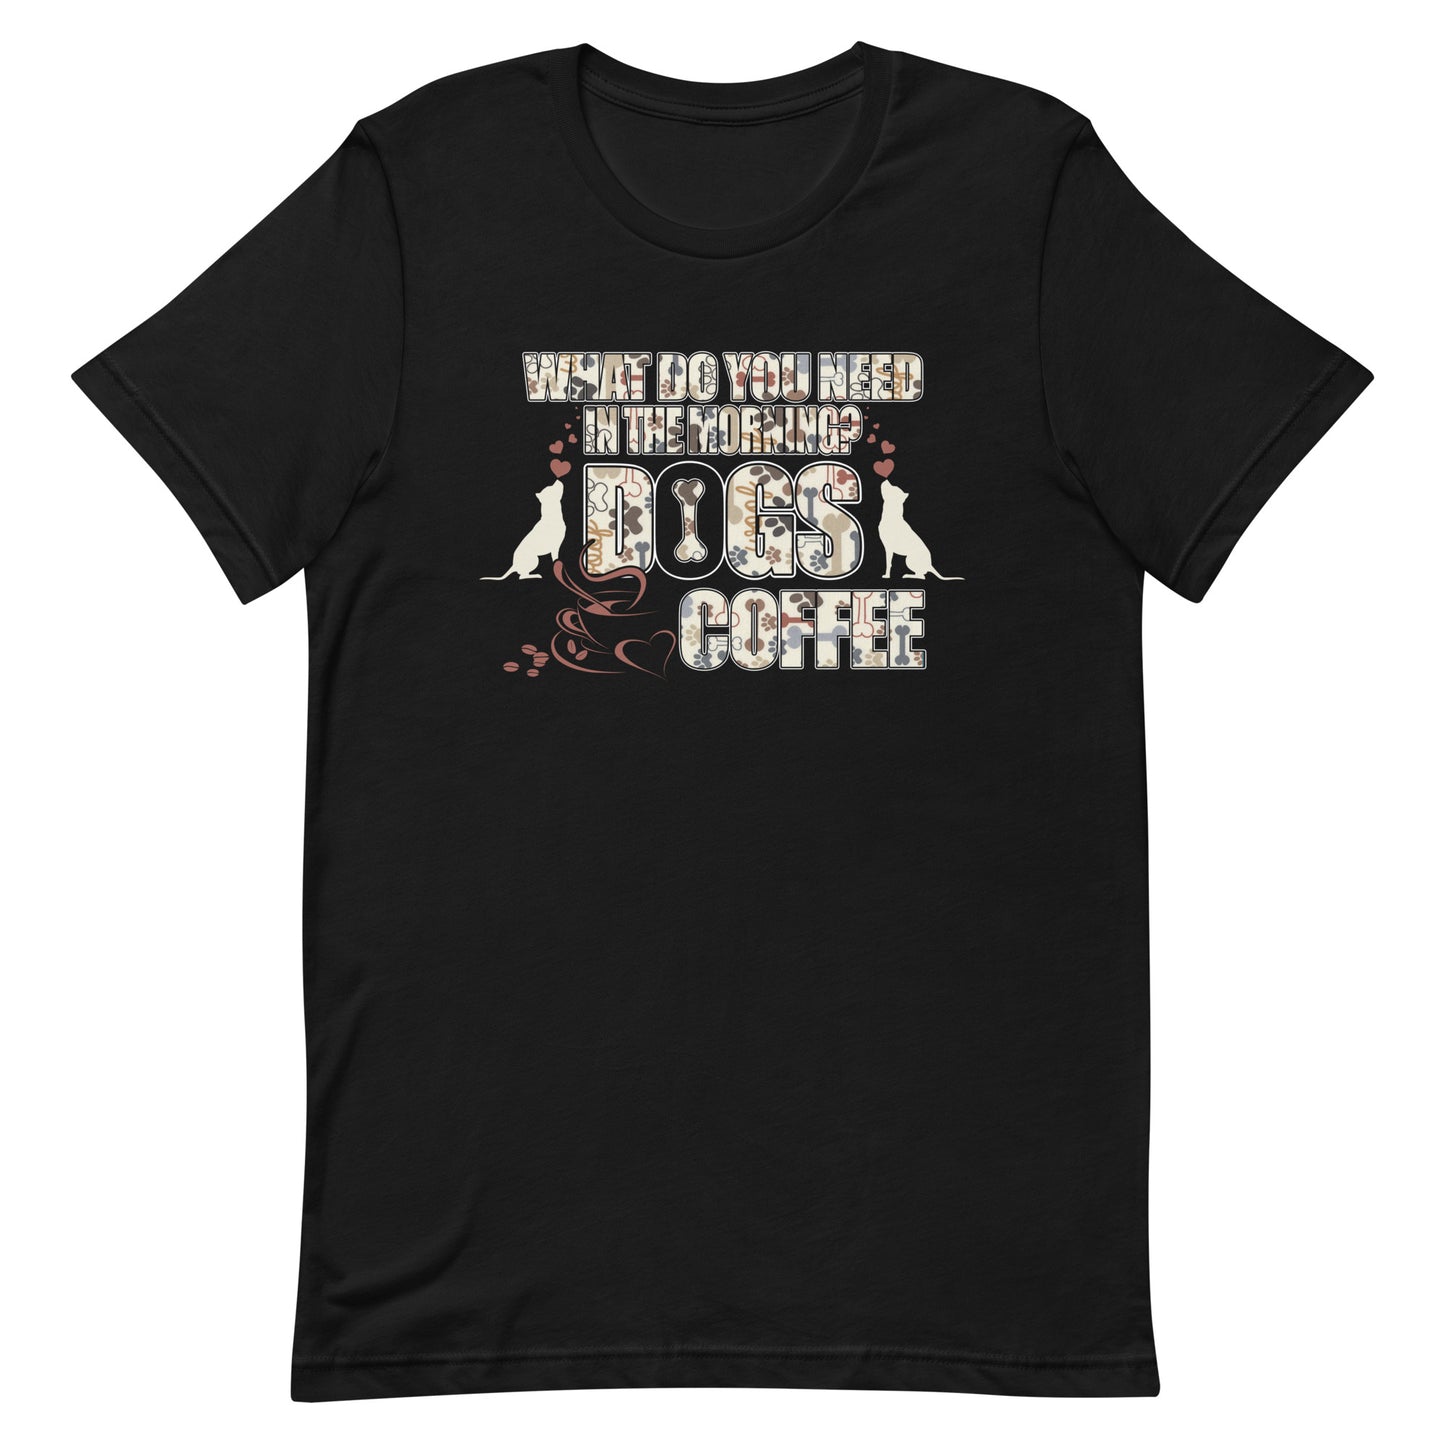 Dogs & Coffee T-Shirt